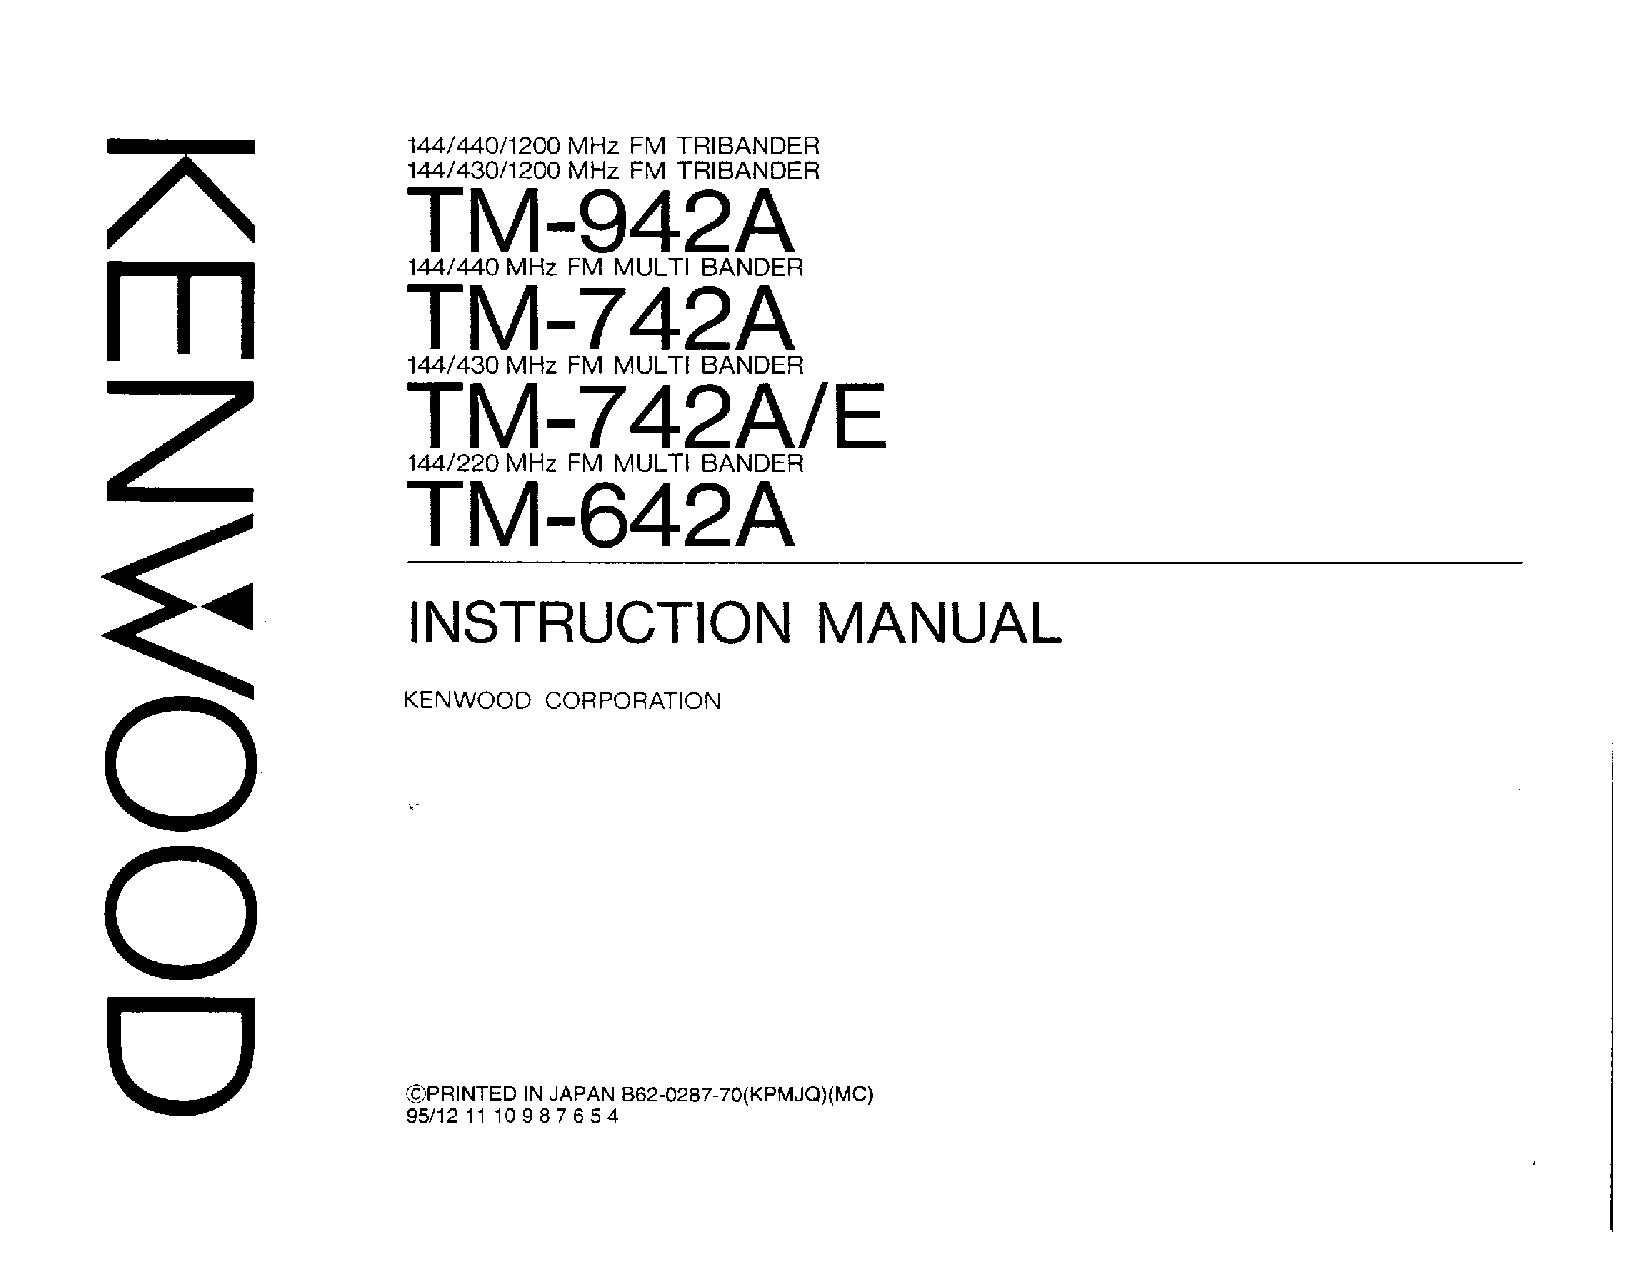 Kenwood TM-642A, TM-742E, TM-742A, TM-942A User Manual